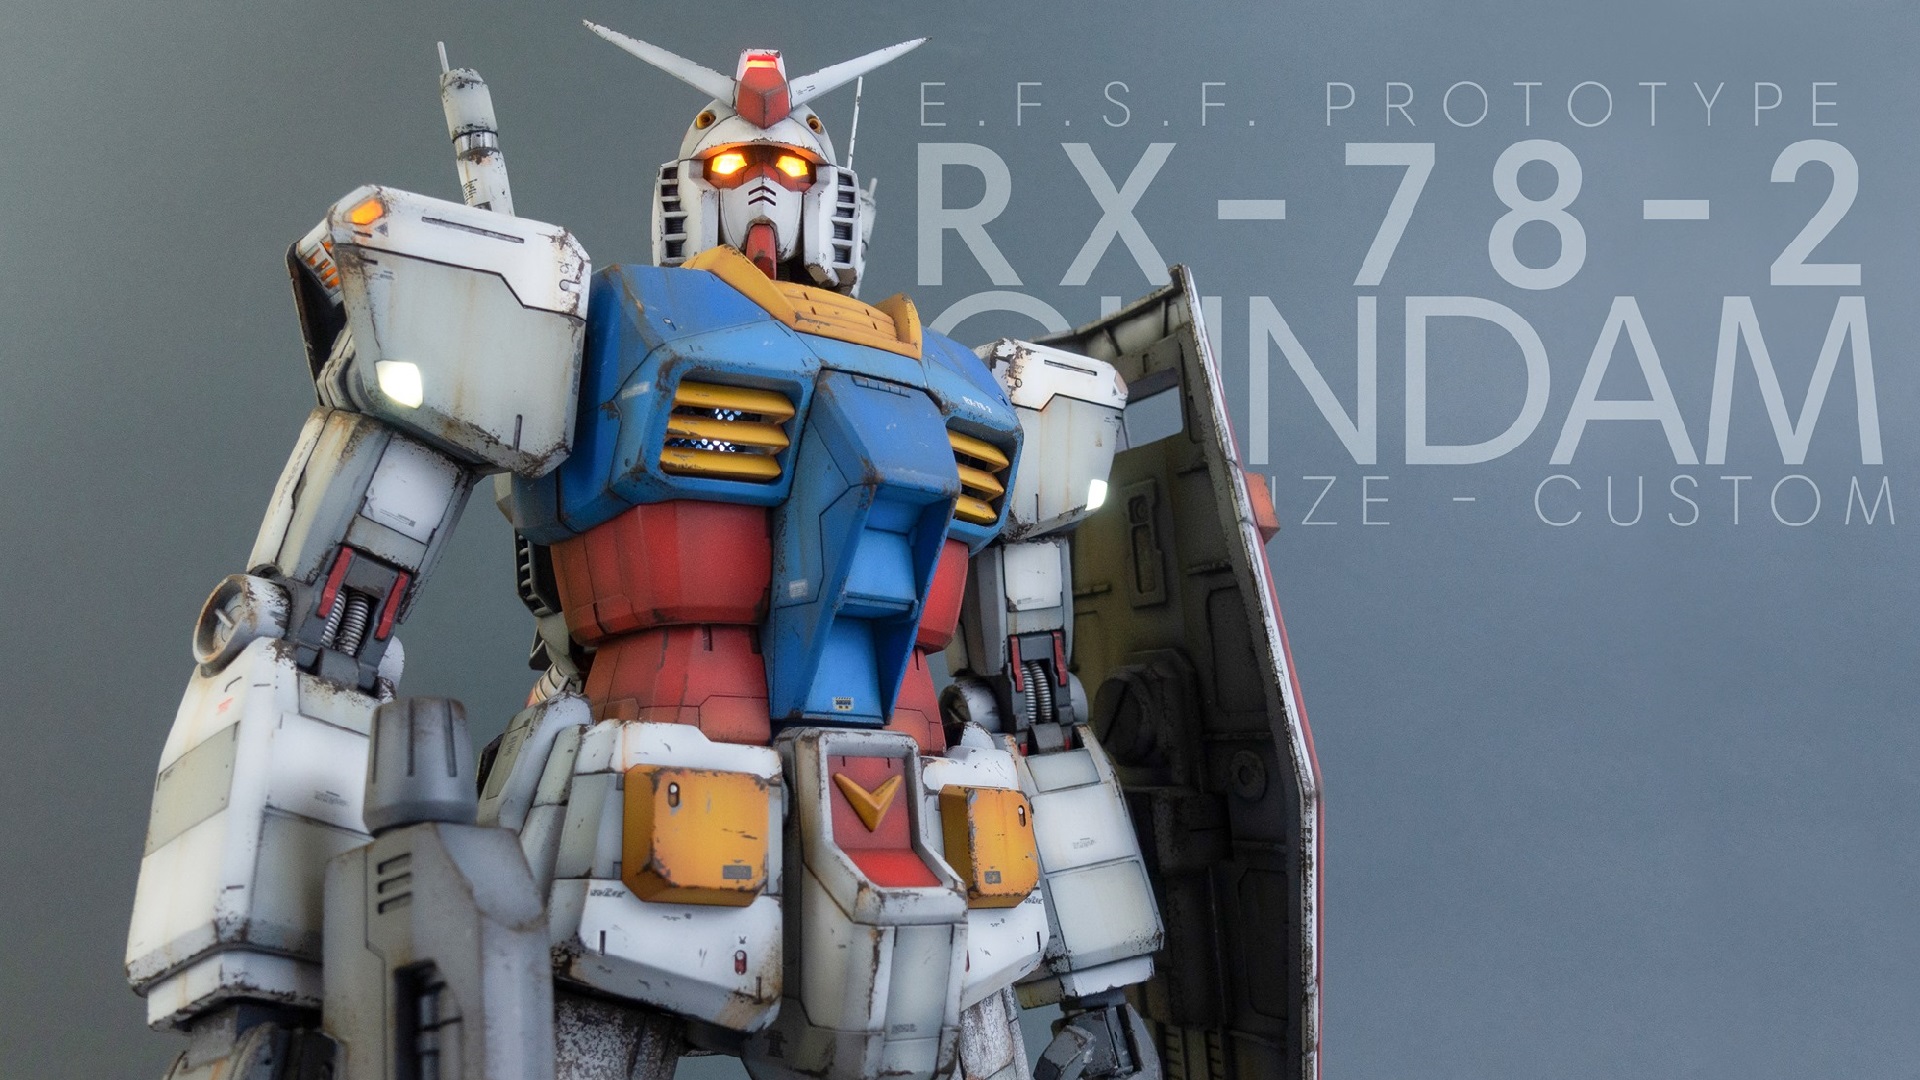 Anime 1920x1080 Mobile Suit Mobile Suit Gundam RX-78 Gundam futuristic science fiction robot mechs anime